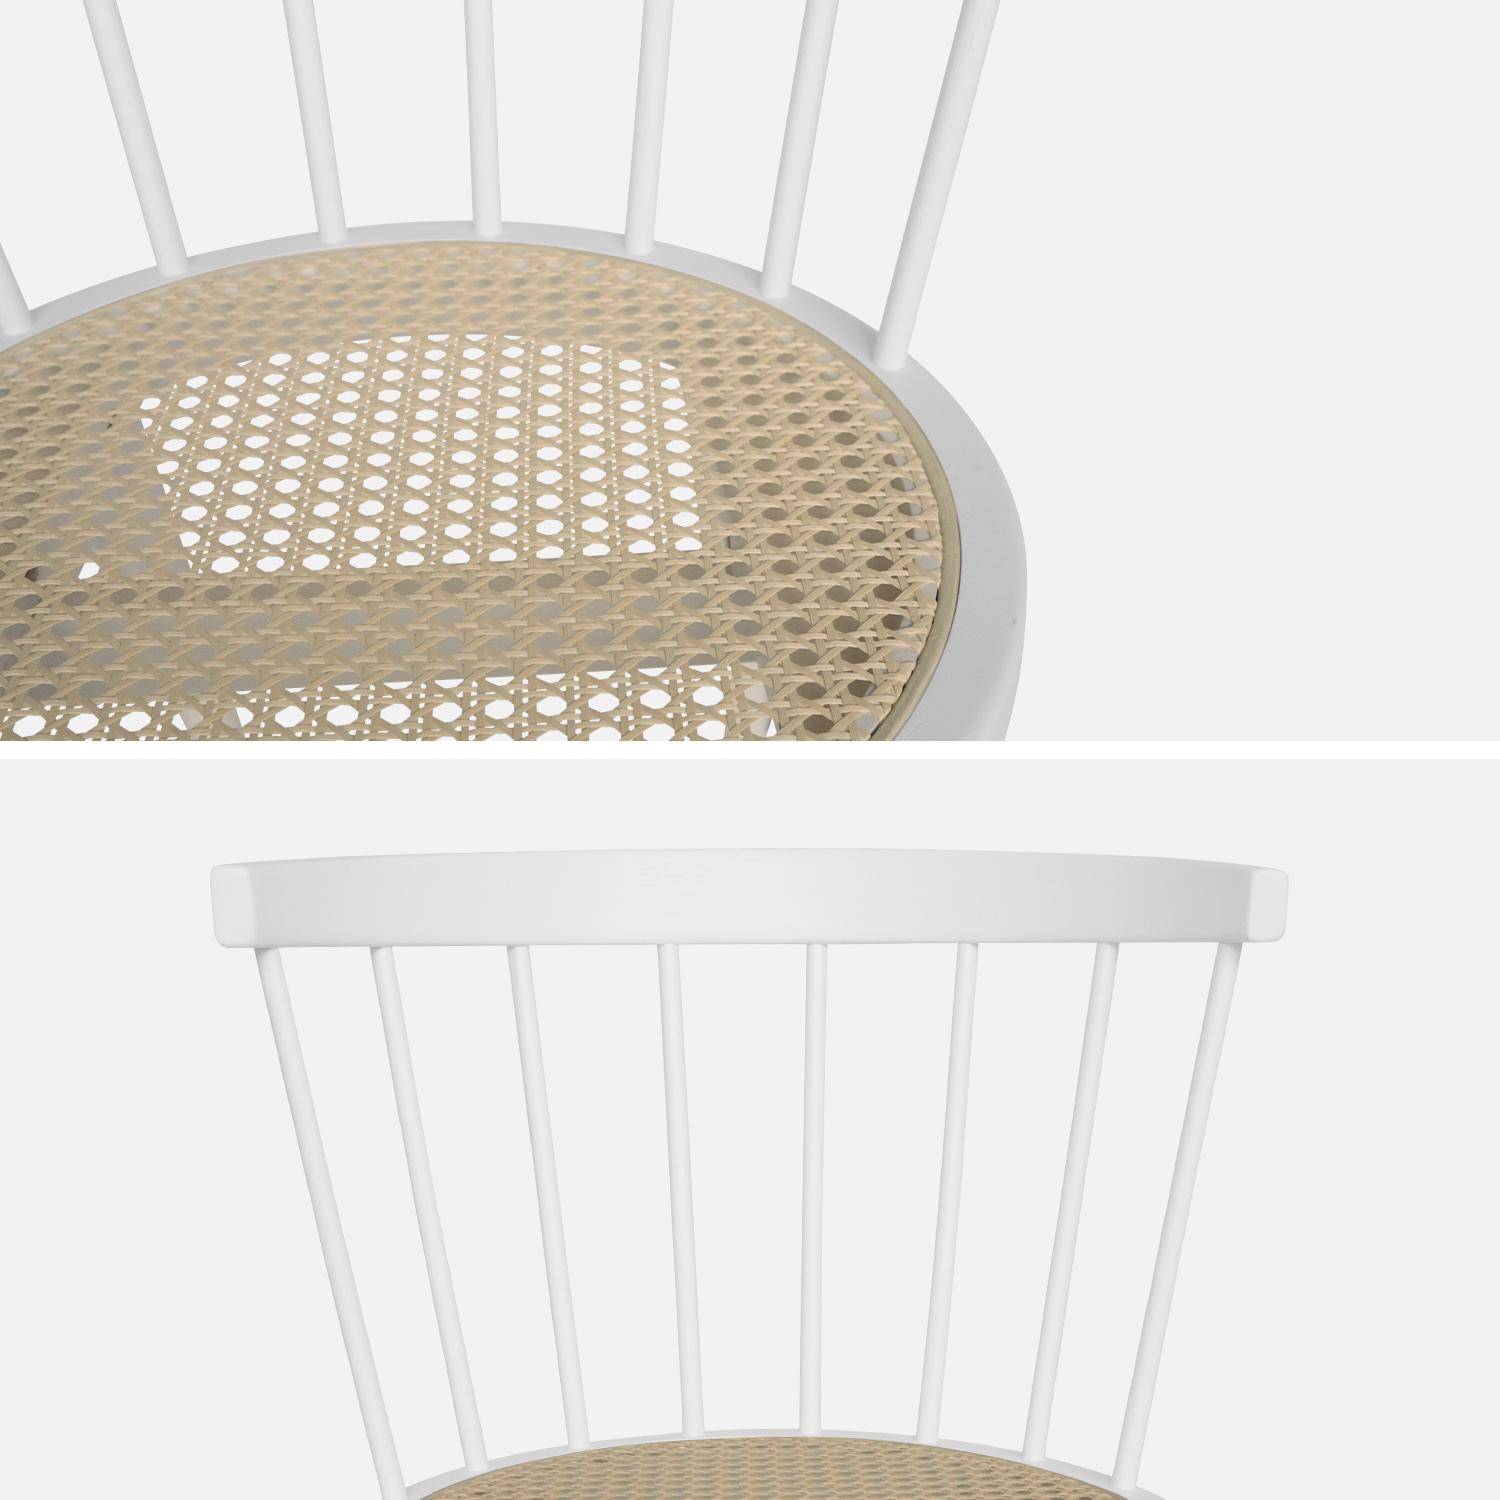 Pair of  Wood and Cane Chairs, Bohemian Spirit, White, L53 x W53.5 x H 6 cm Photo6